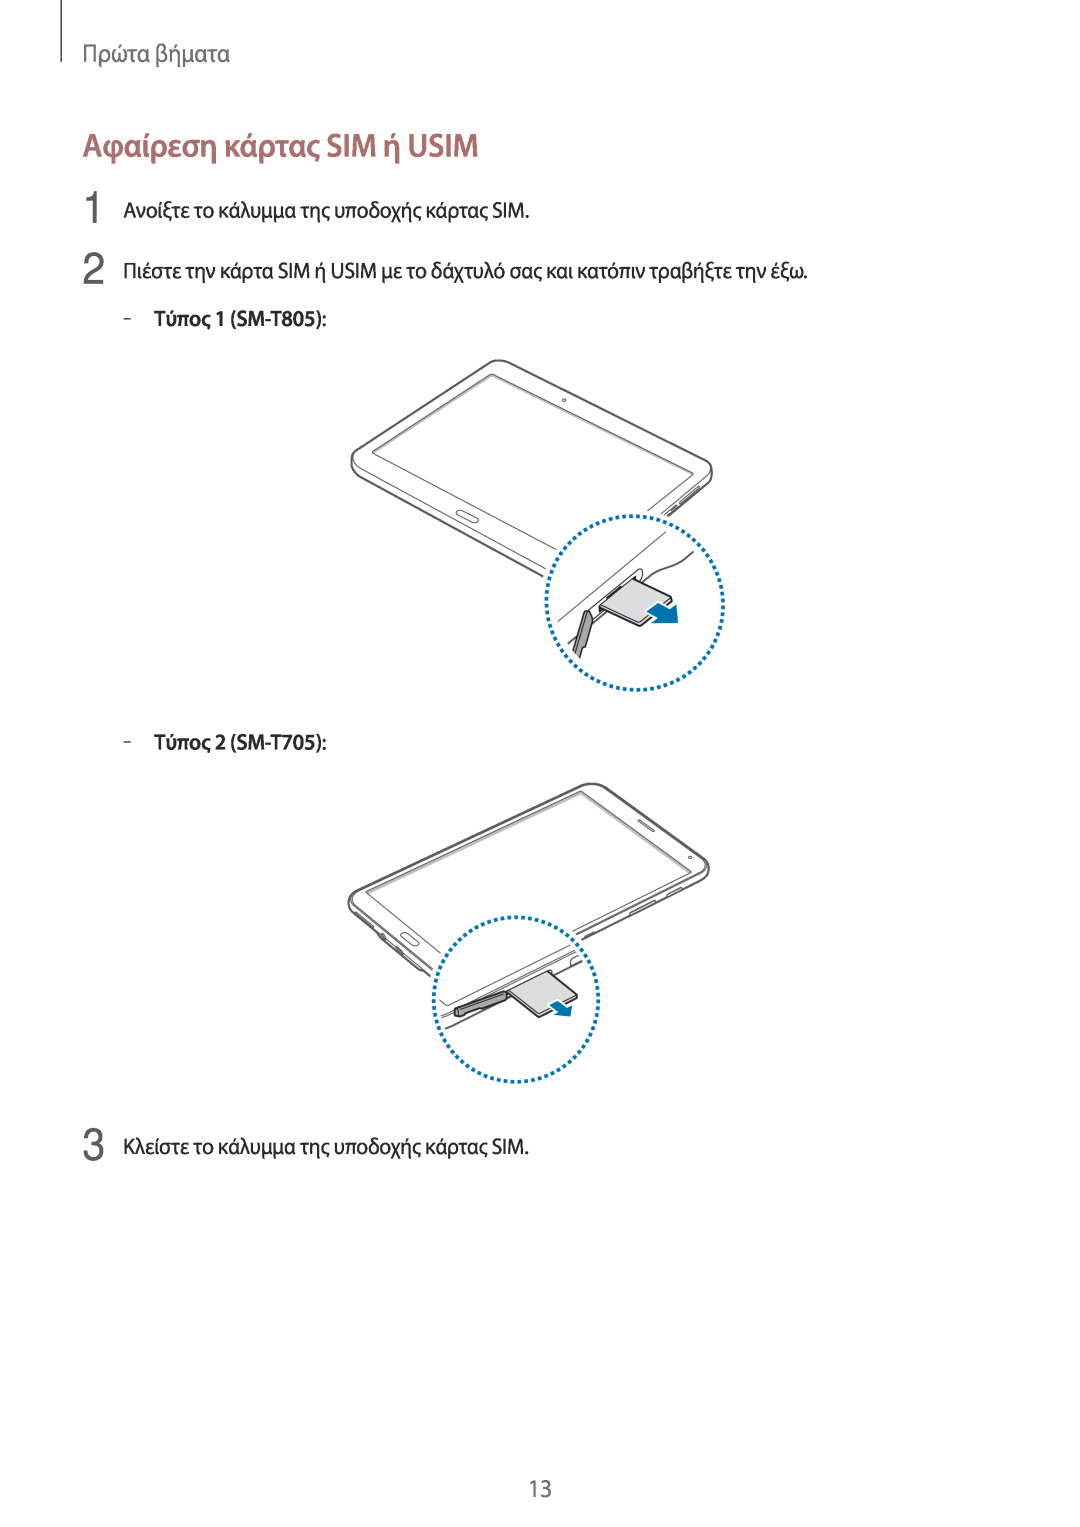 Samsung SM-T705NZWAEUR, SM-T805NTSAEUR manual Αφαίρεση κάρτας SIM ή USIM, Πρώτα βήματα, Τύπος 1 SM-T805, Τύπος 2 SM-T705 